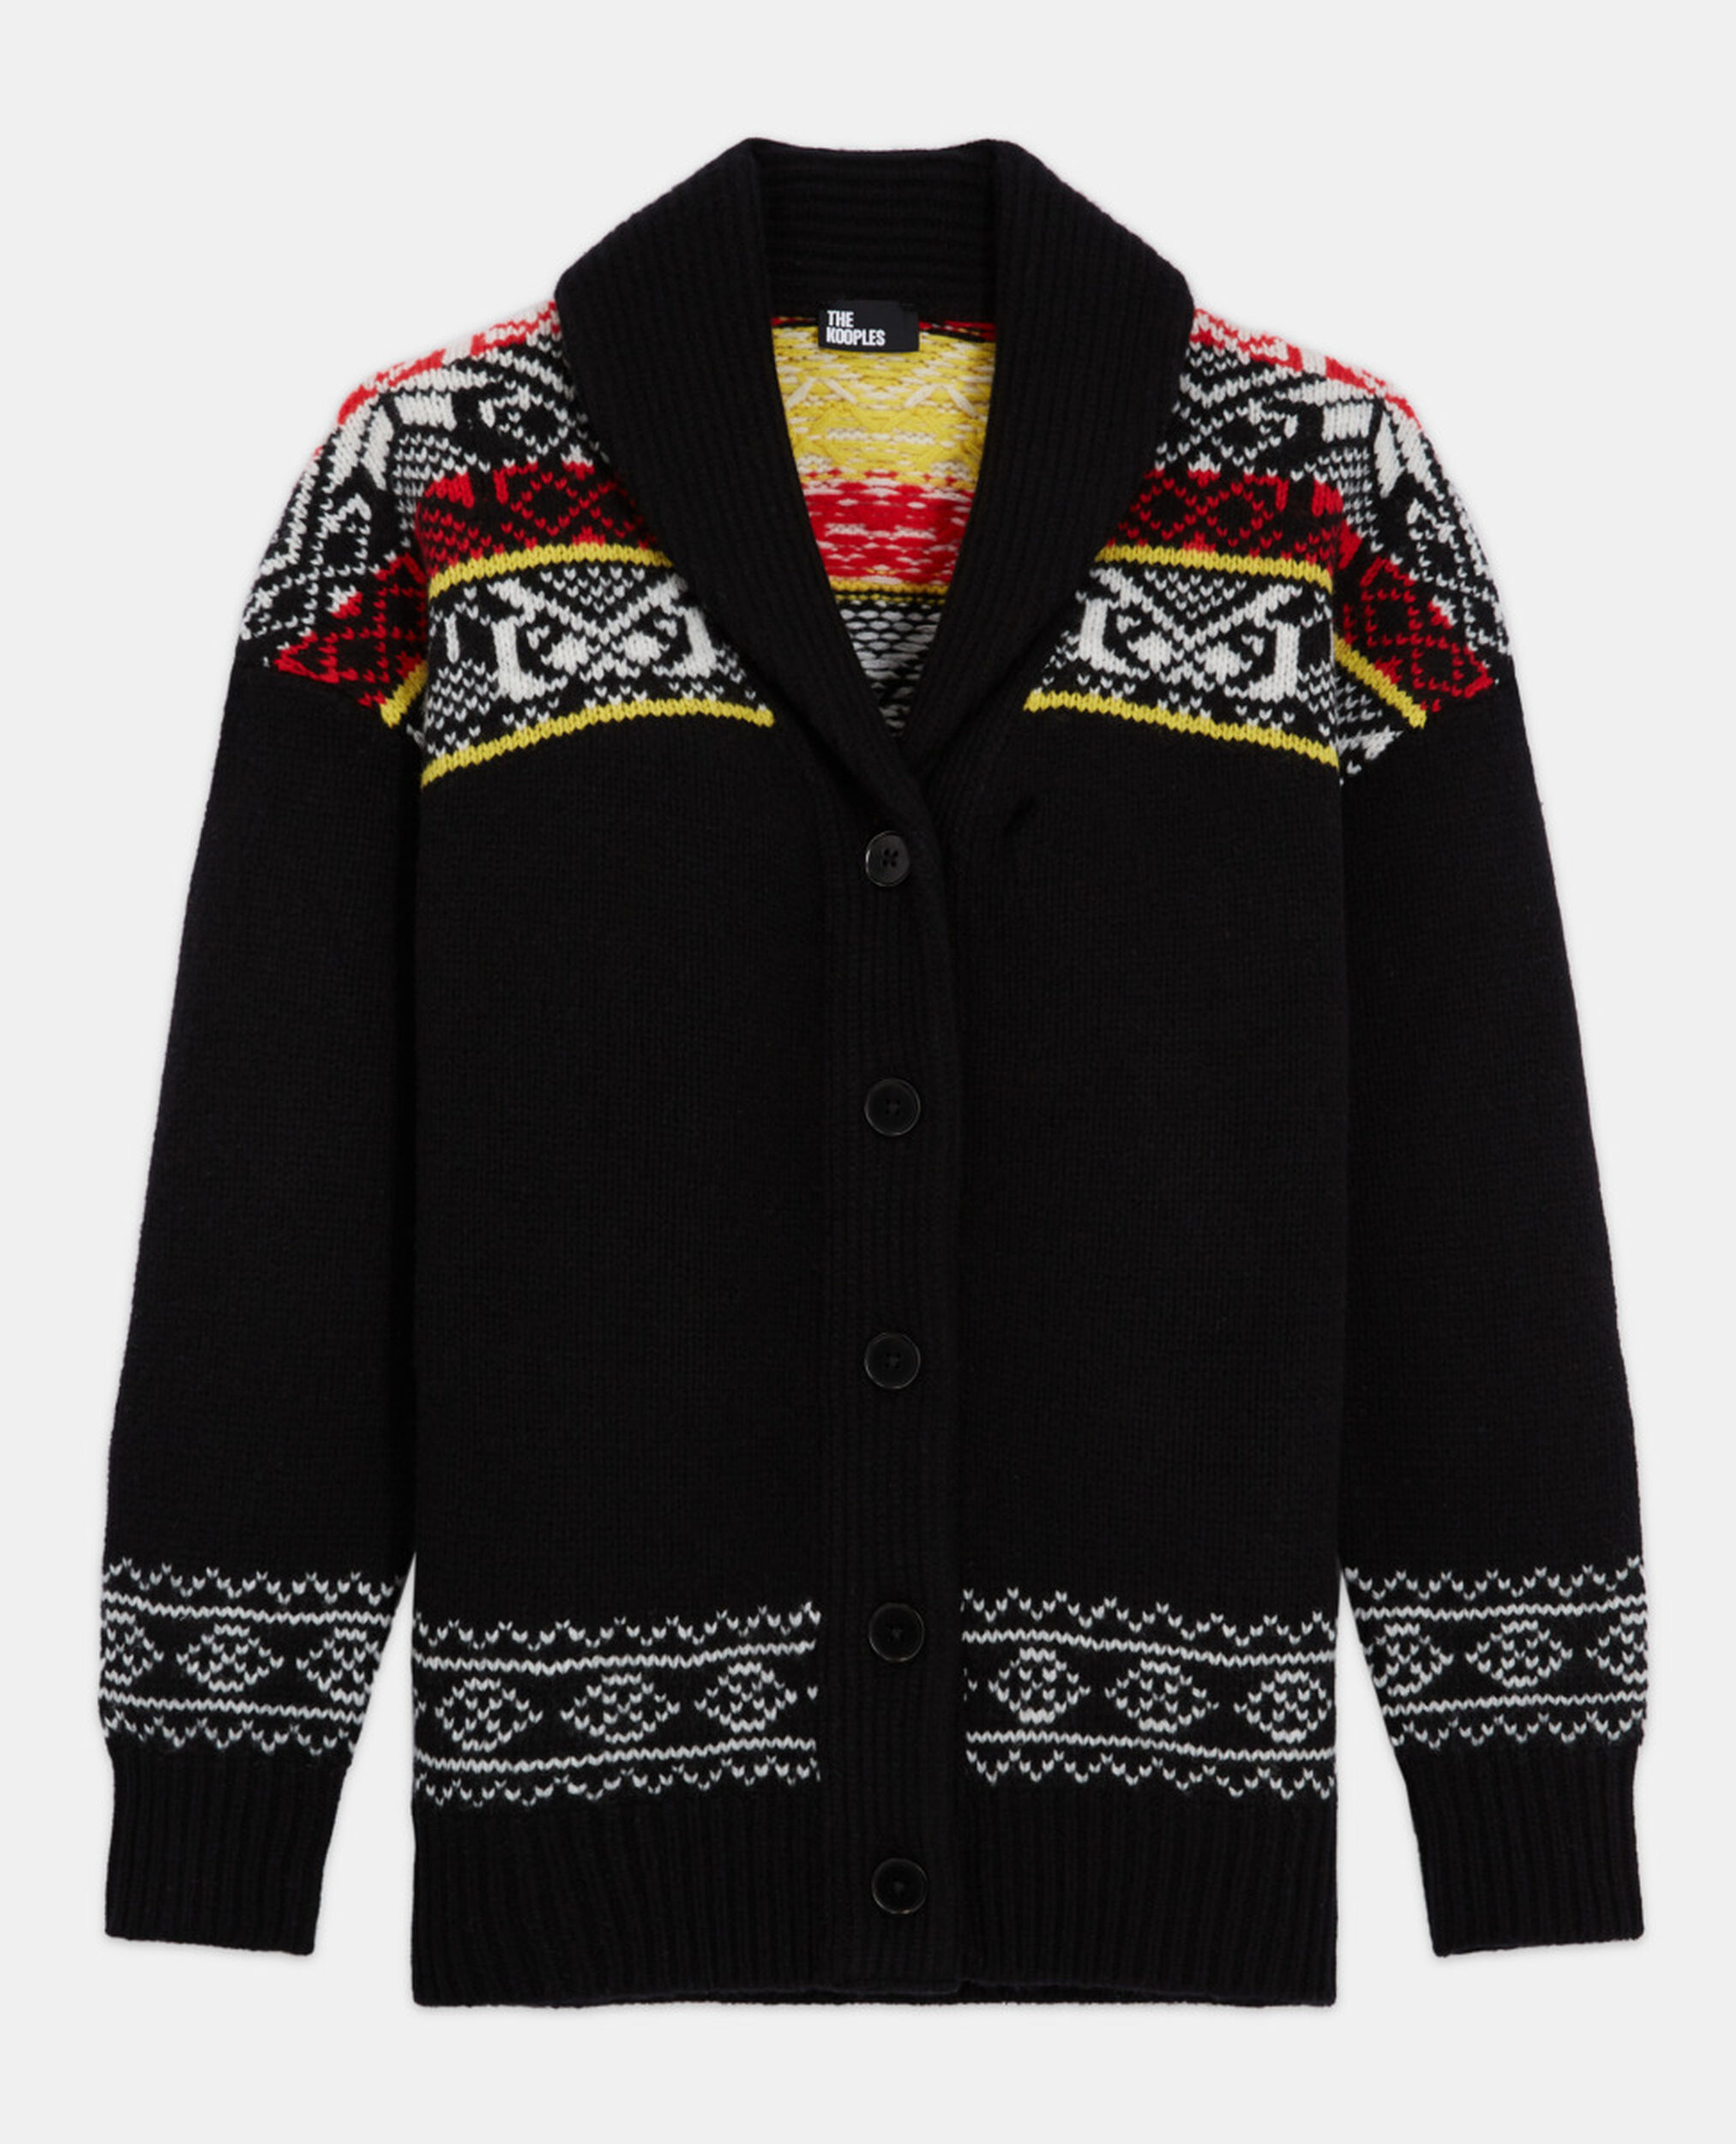 Cardigan en laine à motifs, BLACK / RED / YELLOW, hi-res image number null